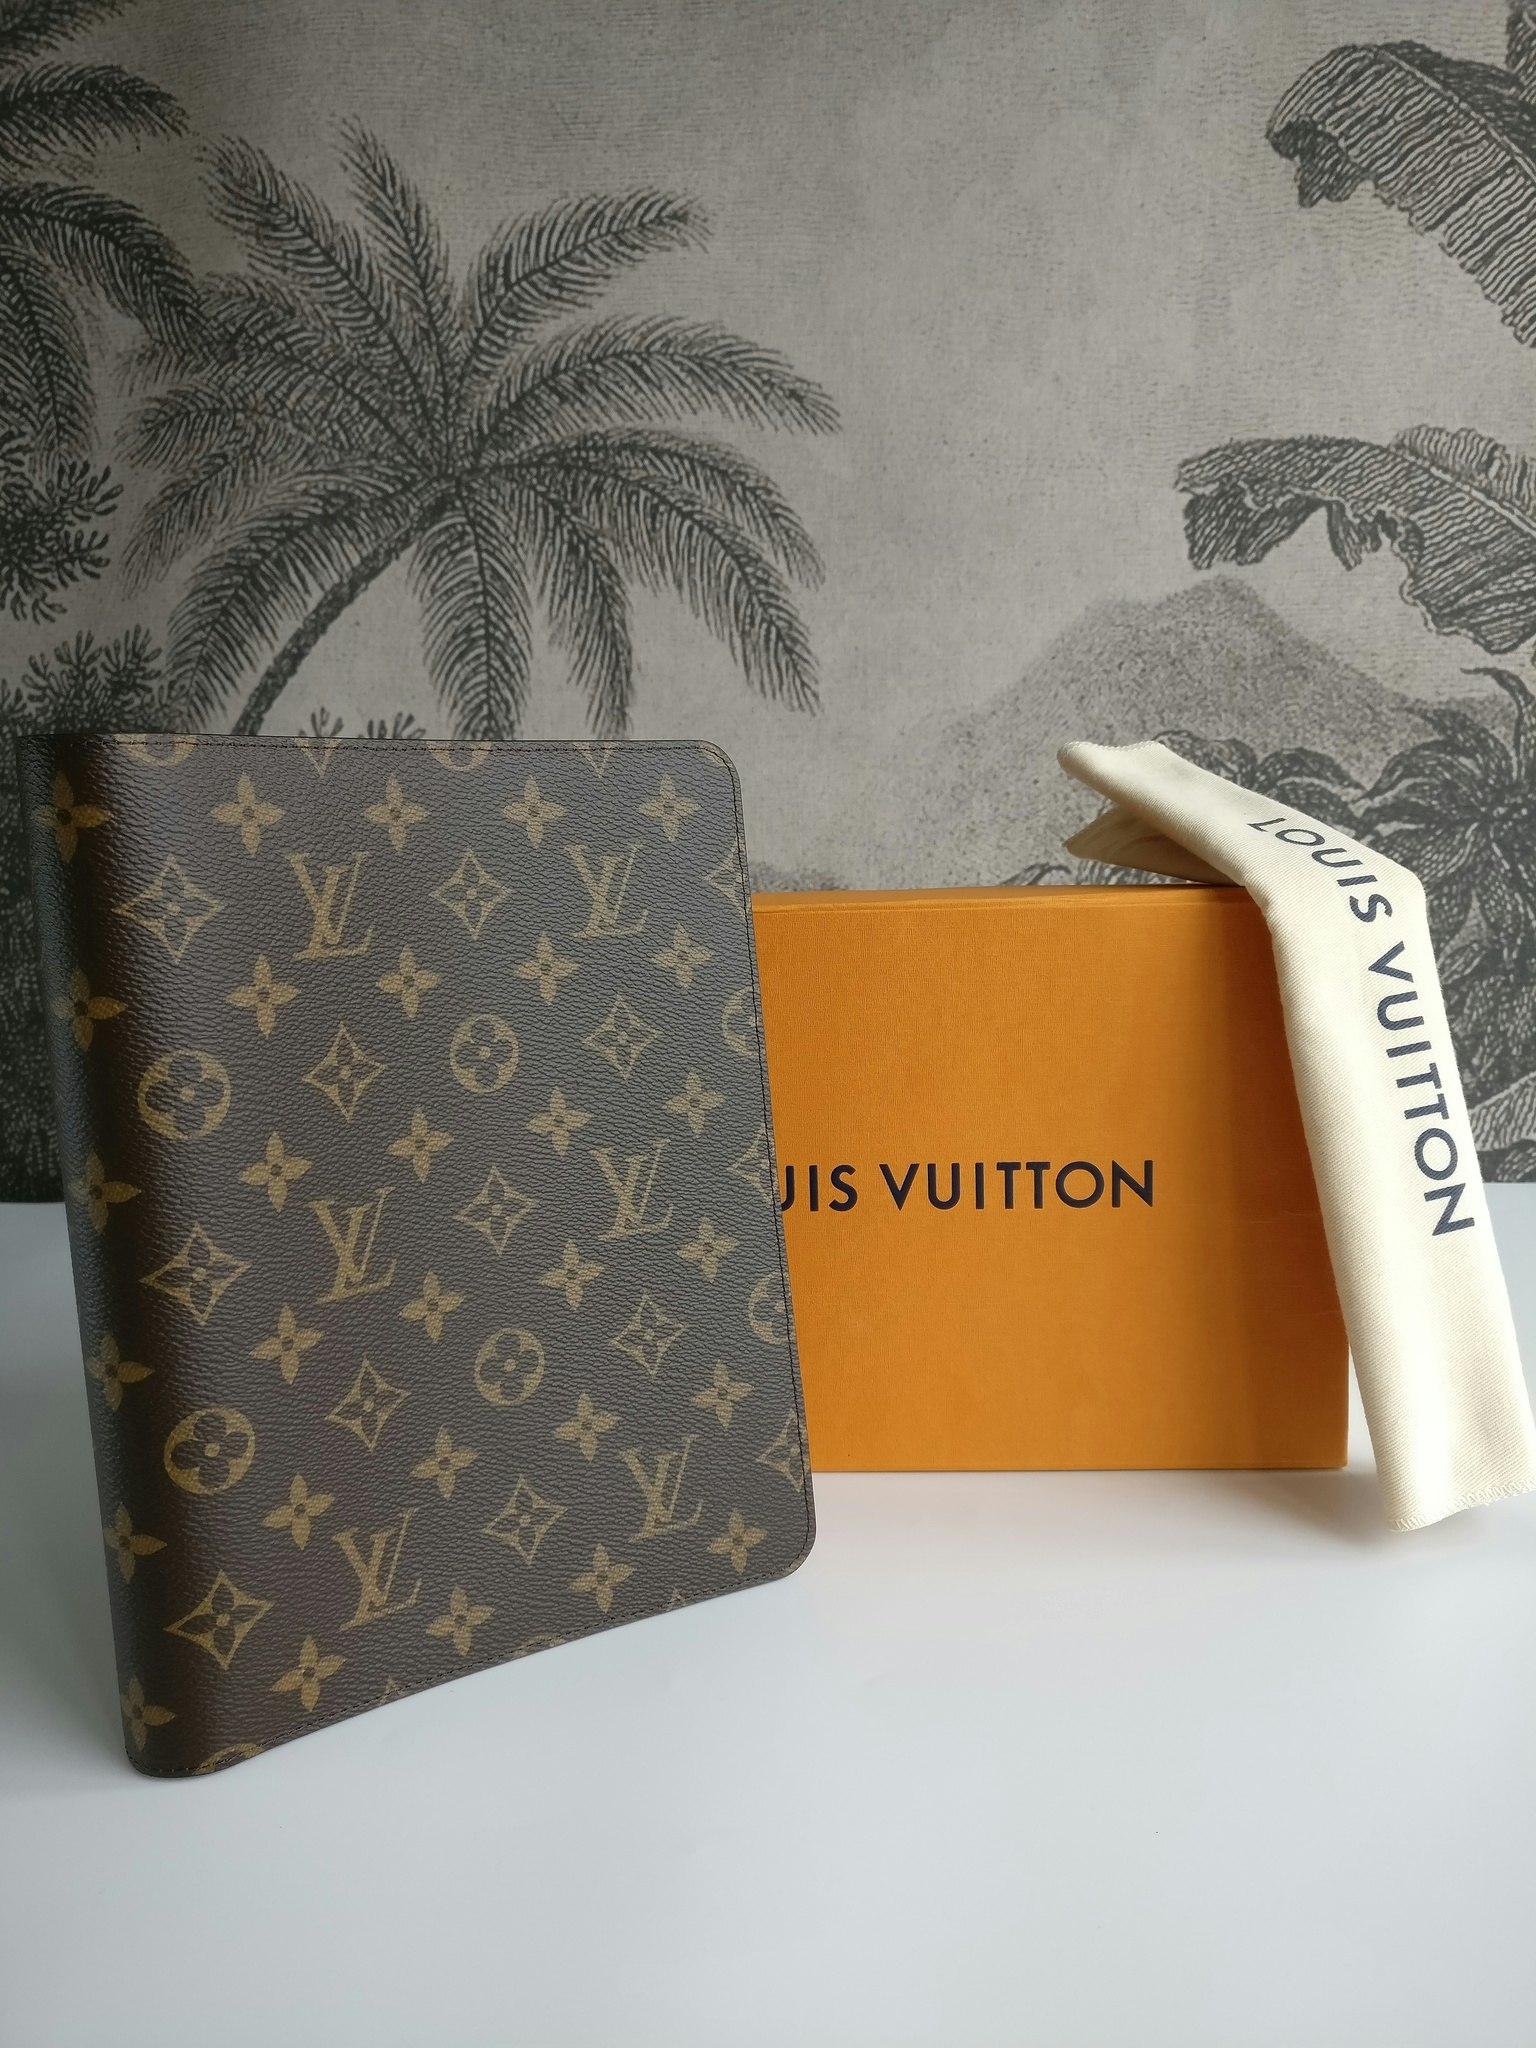 Louis Vuitton desk agenda insert